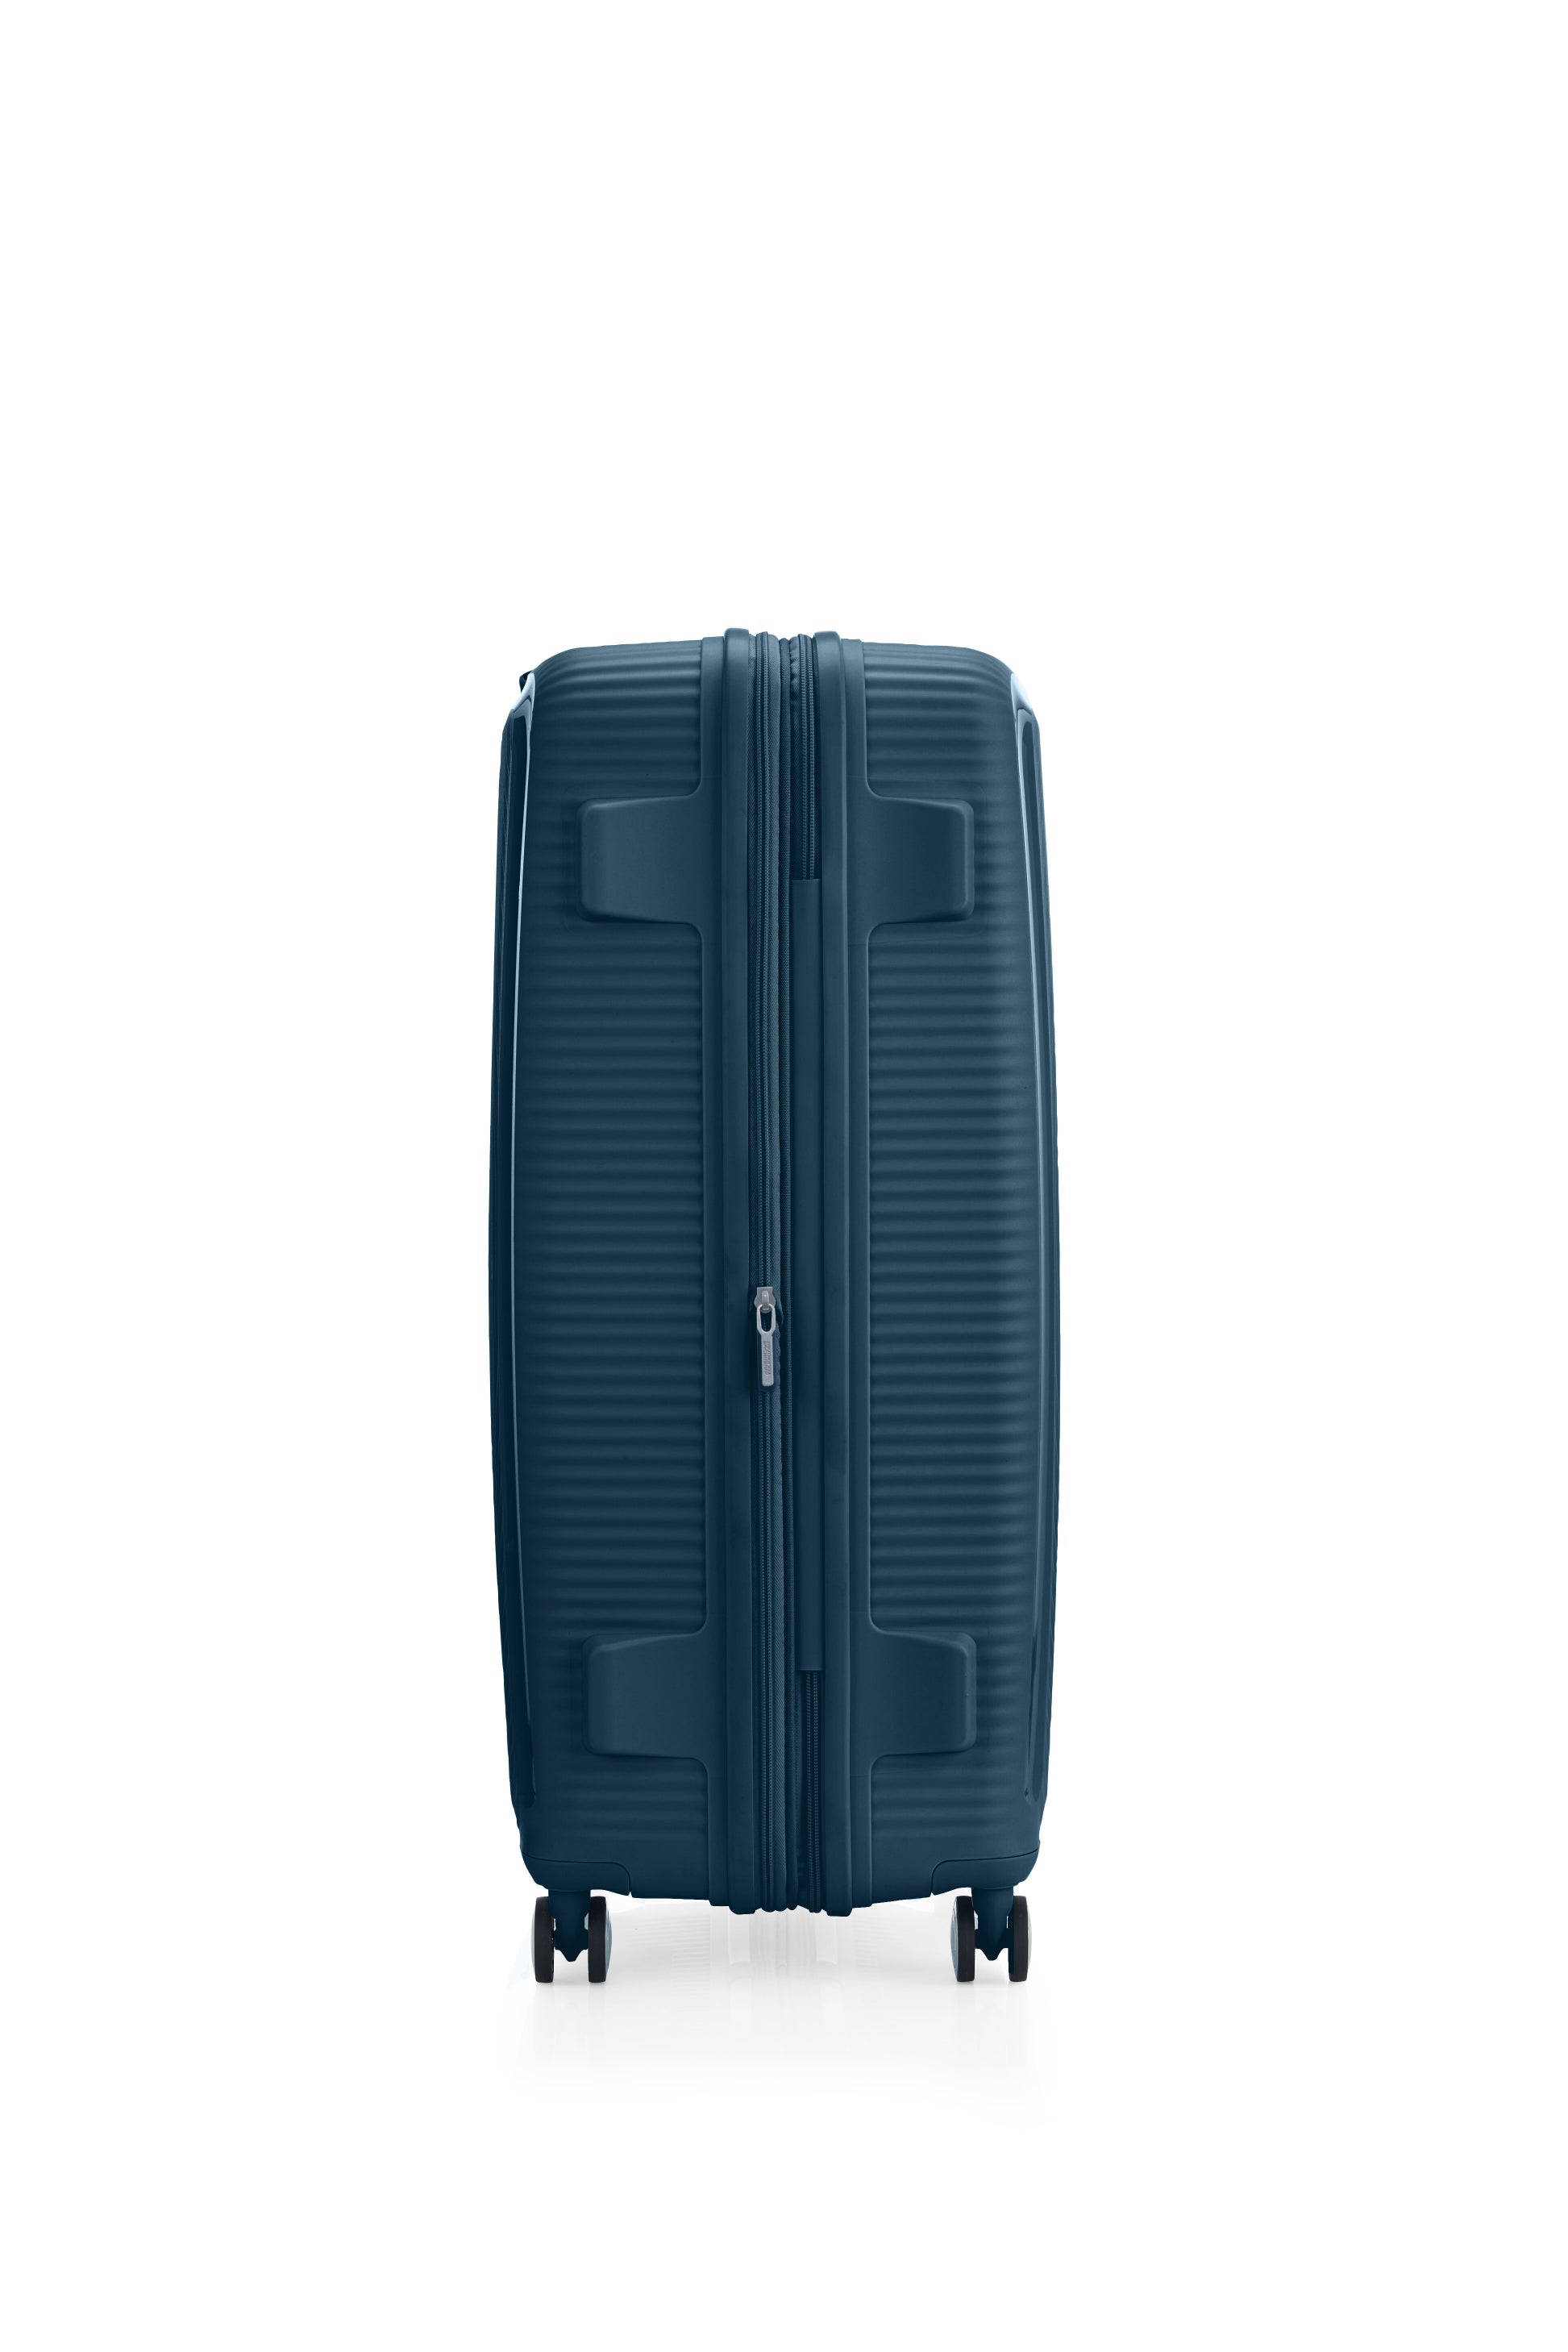 American Tourister - Curio 2.0 80cm Large Suitcase - Varsity Green-4